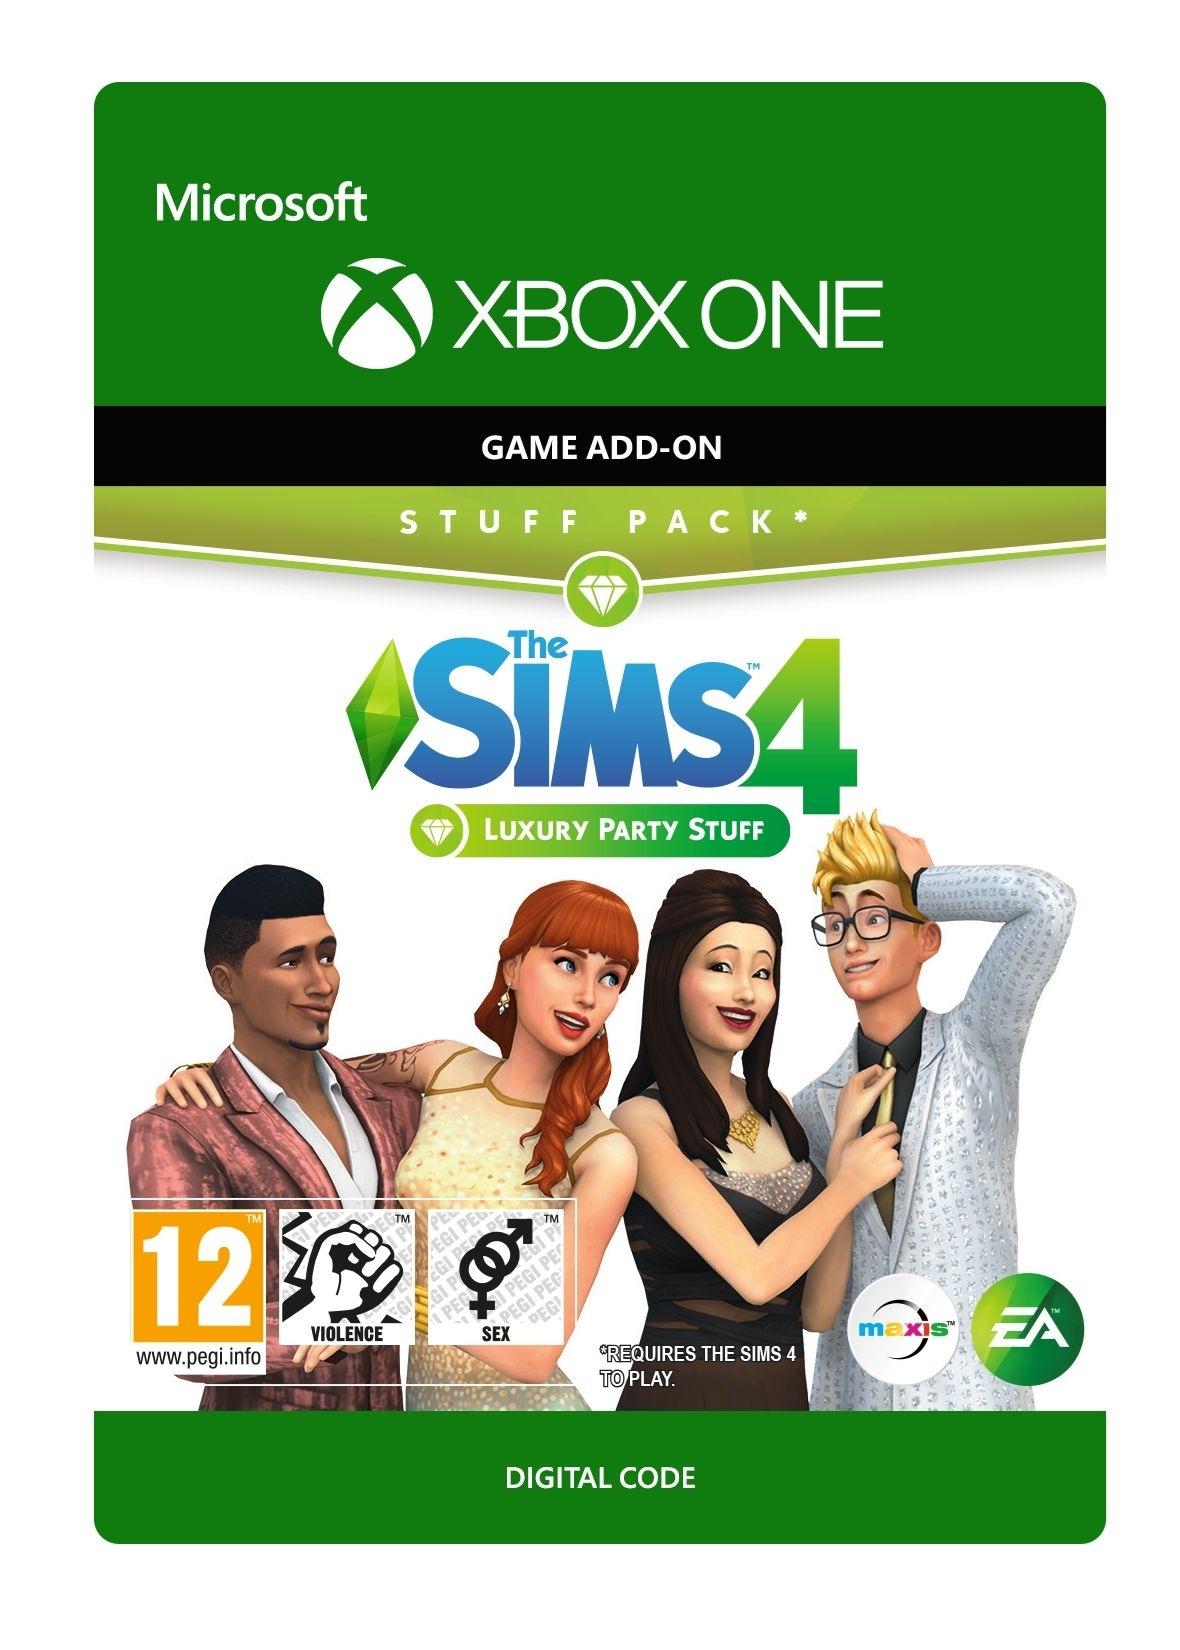 The Sims 4: (SP1) Luxury Party Stuff - Xbox One - Add-on | 7D4-00229 (e963c323-9e5b-4145-9e9c-2737d42c828f)